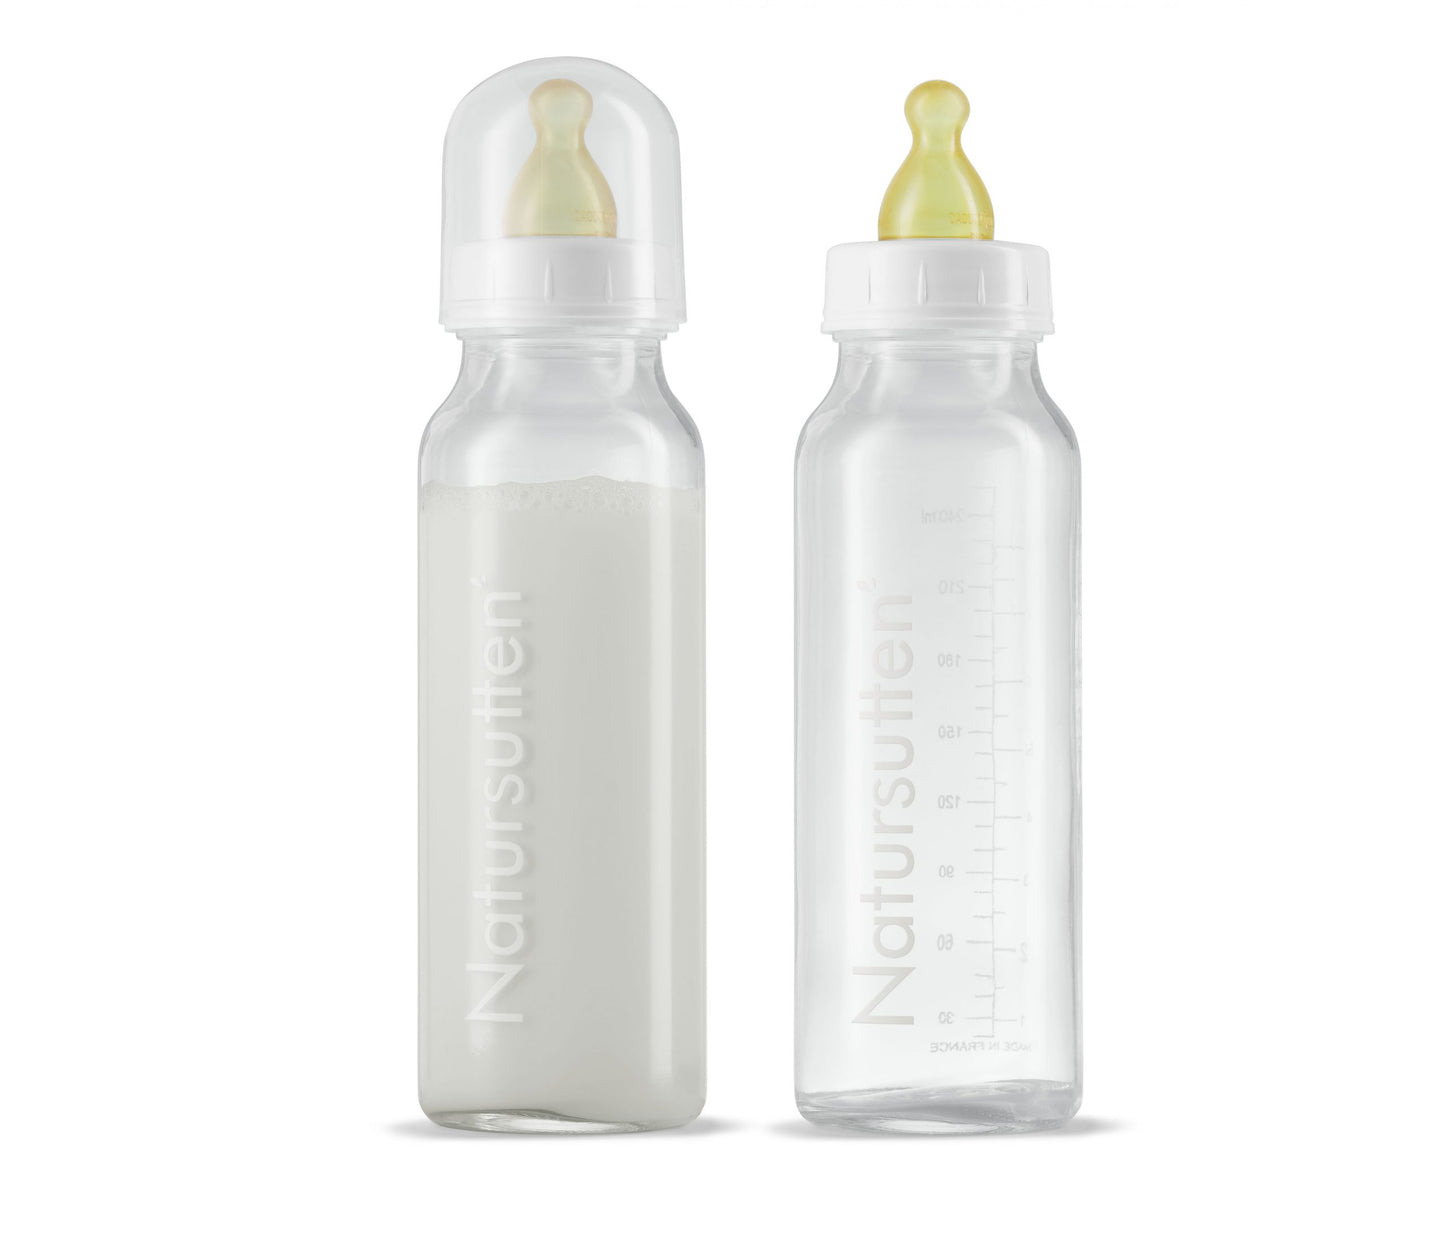 8 oz glass baby bottle made by Natursutten